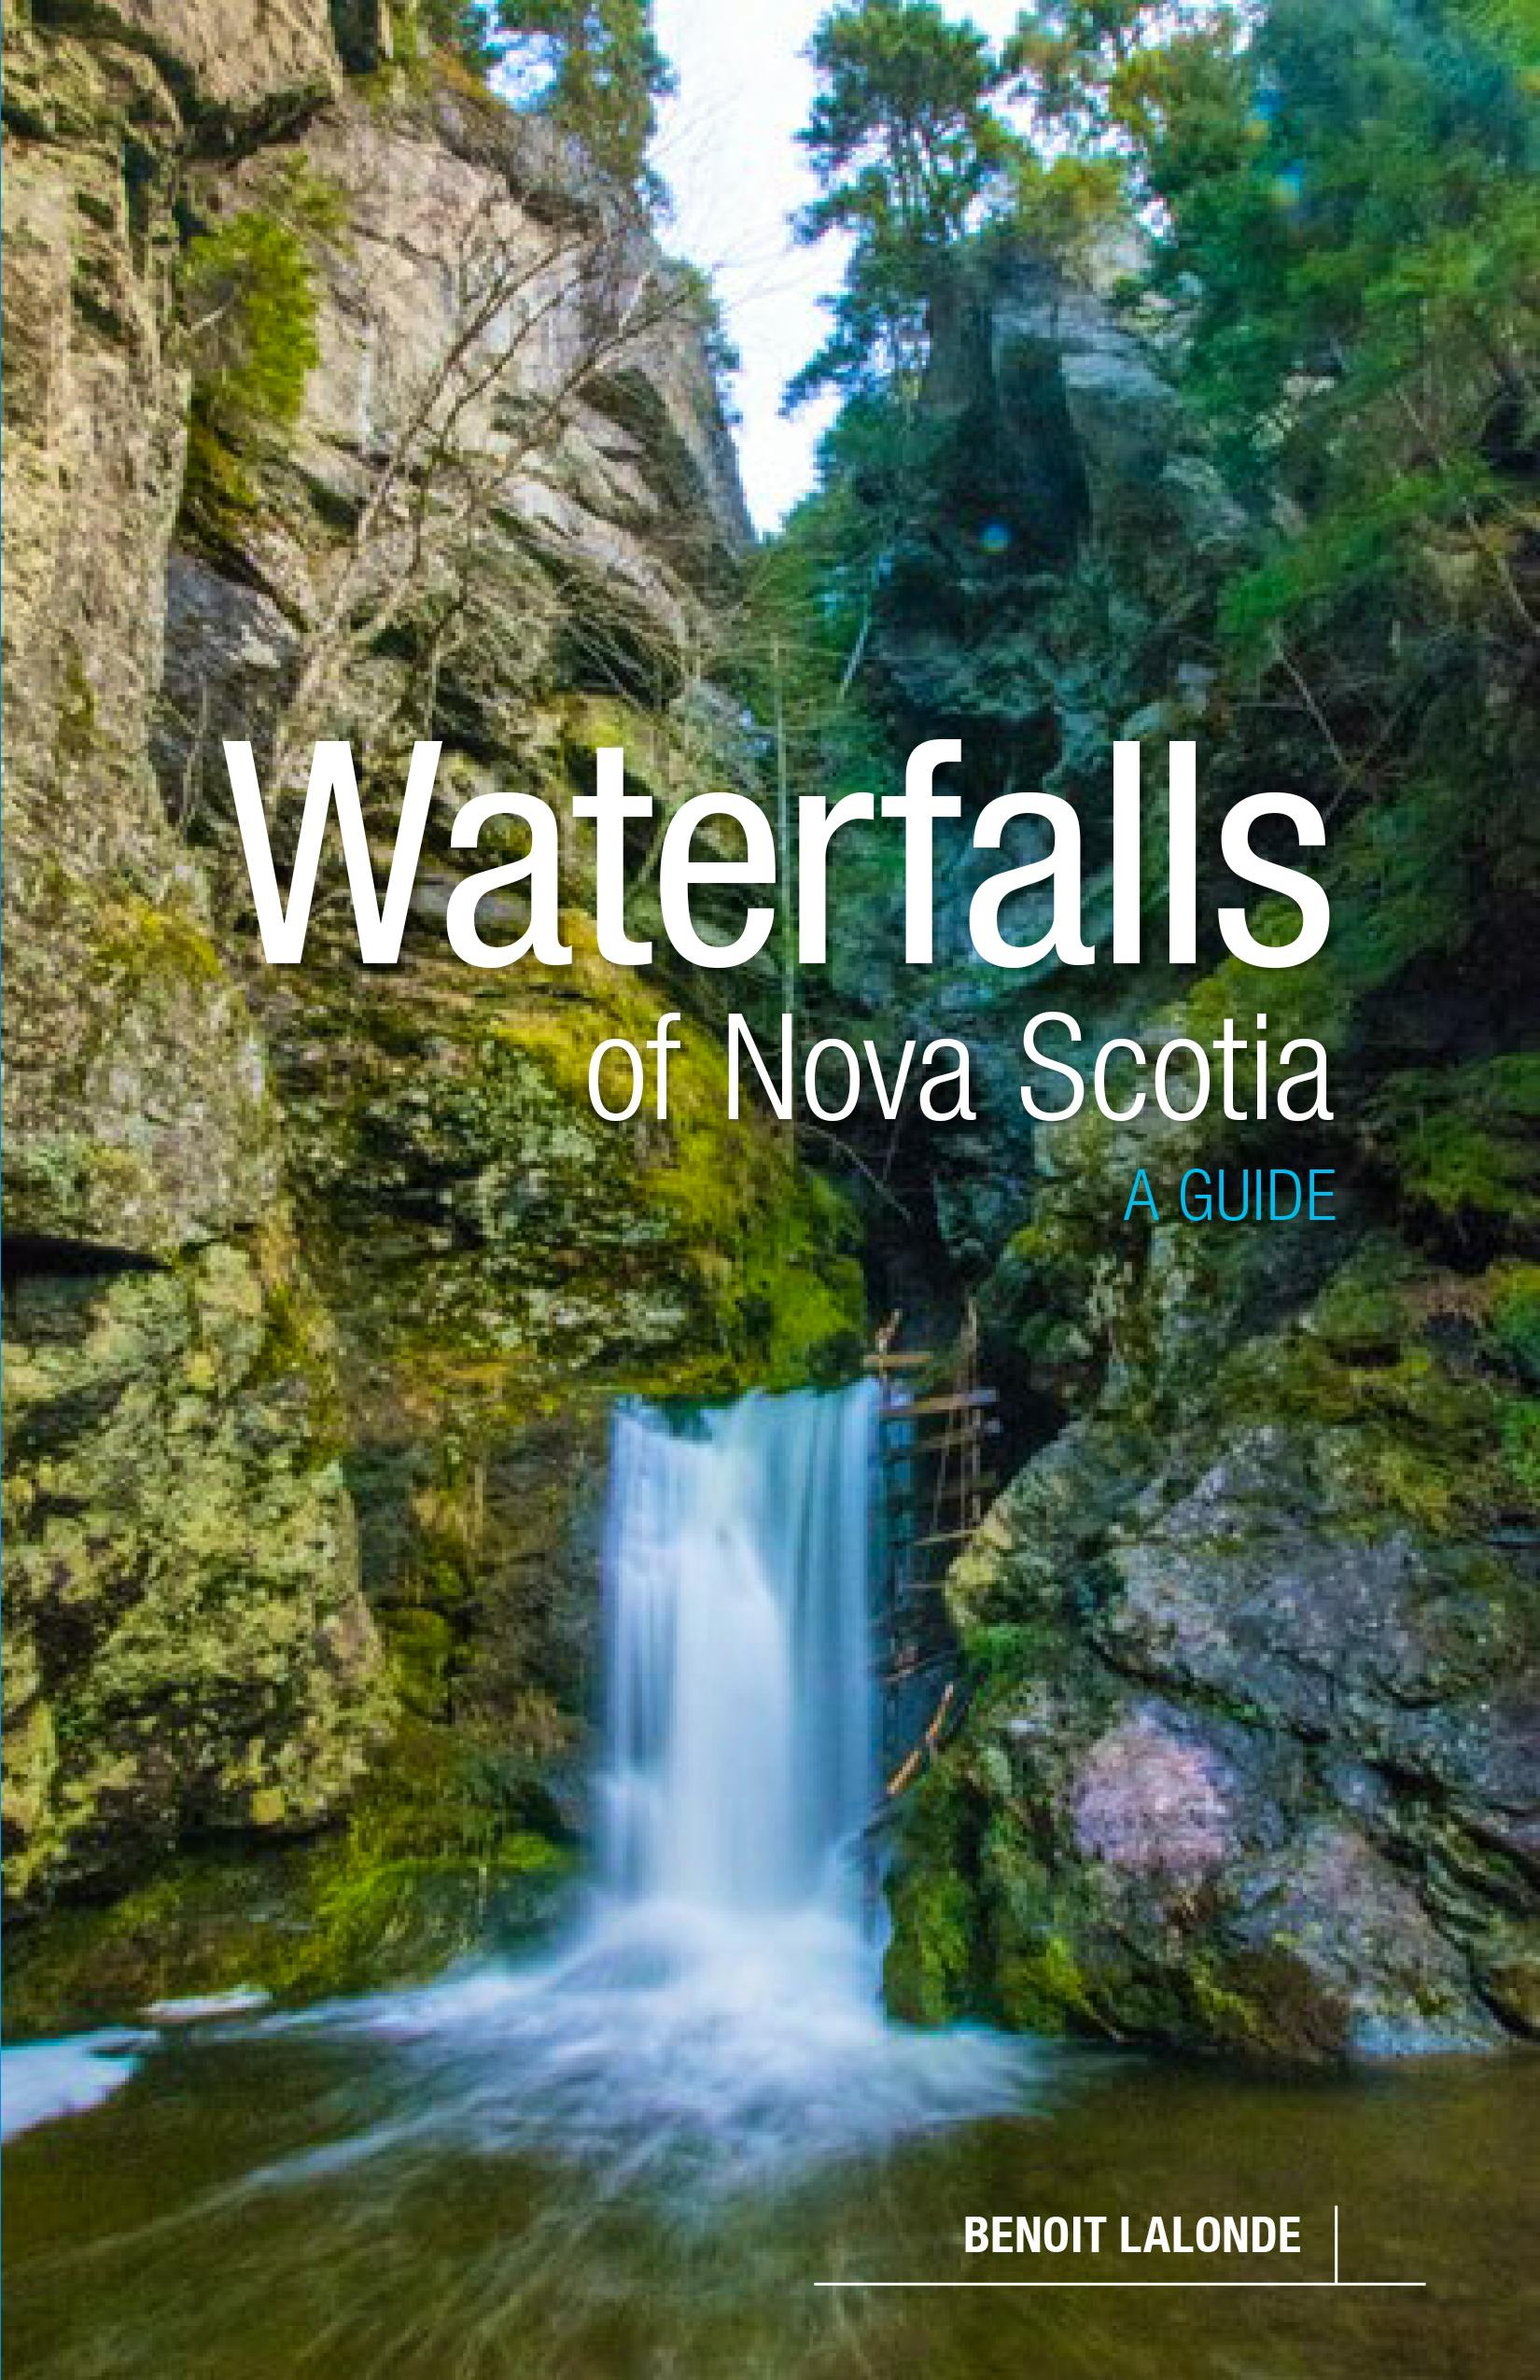 Waterfalls of Nova Scotia by Benoit Lalonde (Local Interest)